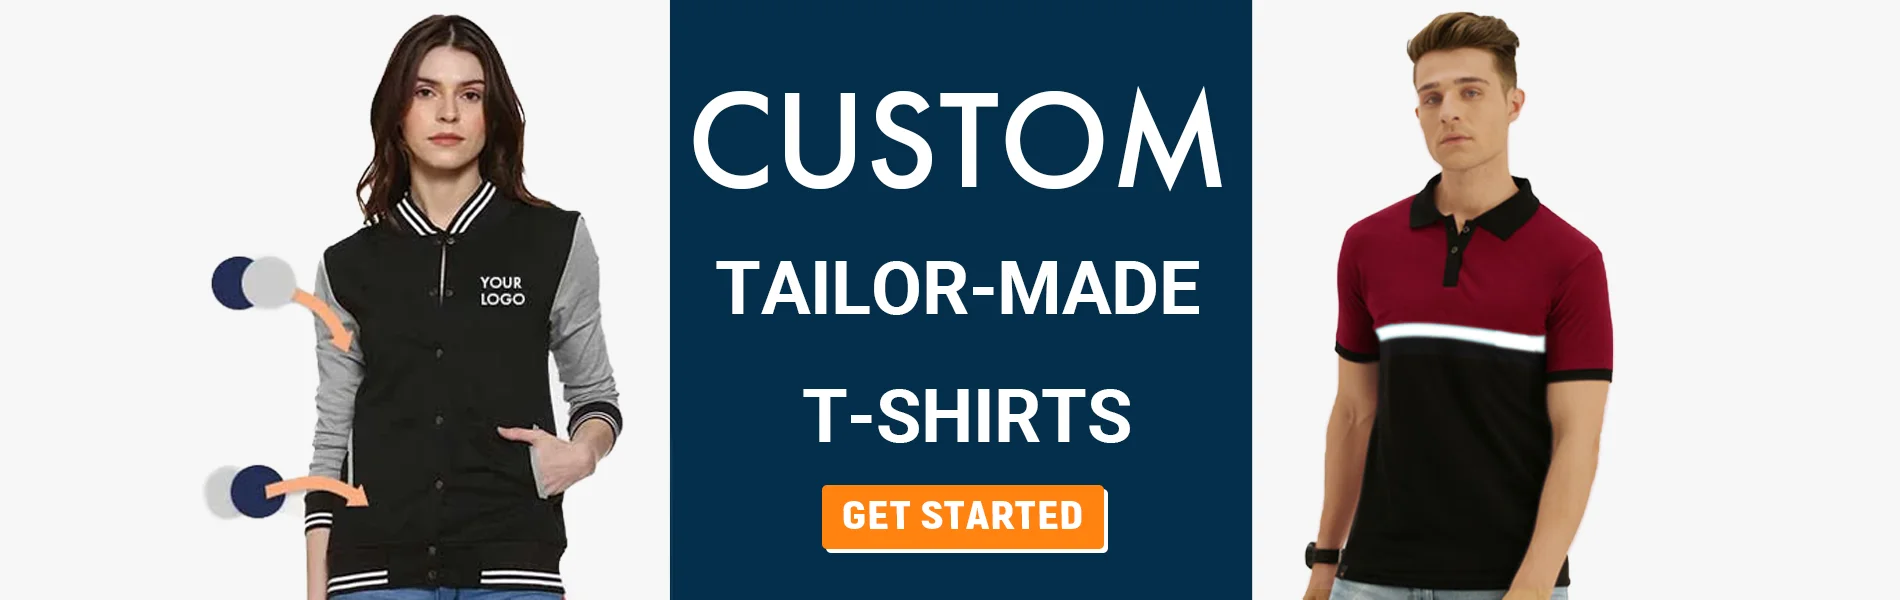 custom tailormade t-shirts lucknow